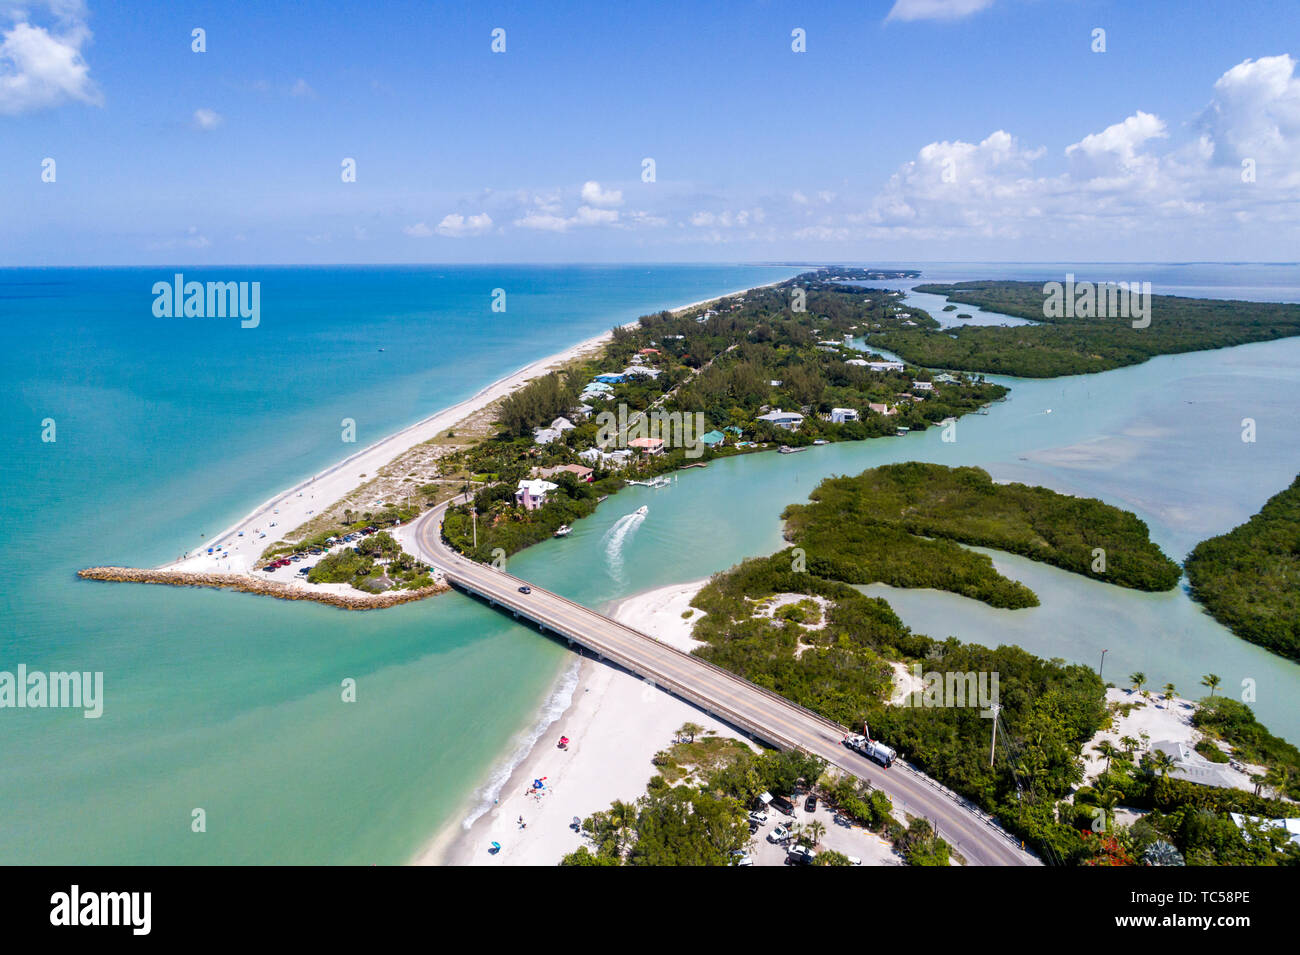 Florida,Captiva Island Sanibel Island,Gulf of Mexico Turner Blind Pass Beach Park,Albright Island Key Preserve Patterson,aerial overhead view,FL190514 Stock Photo